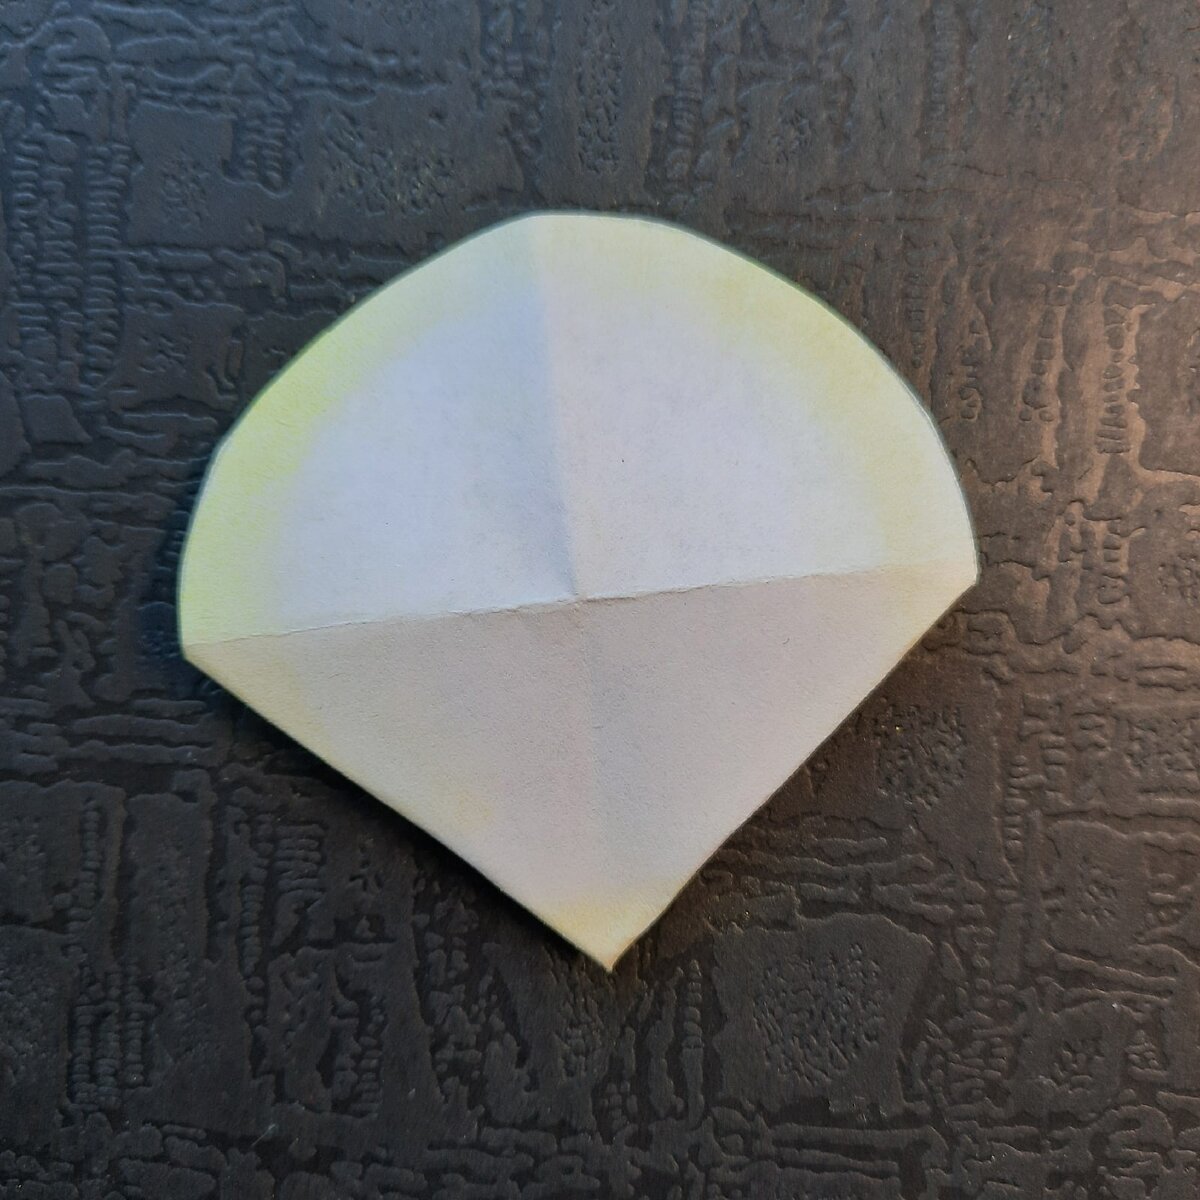 ОРИГАМИ Коробочка Чашка из бумаги | DIY ПОДАРОК Маме на 8 марта | Origami paper Coffee Cup